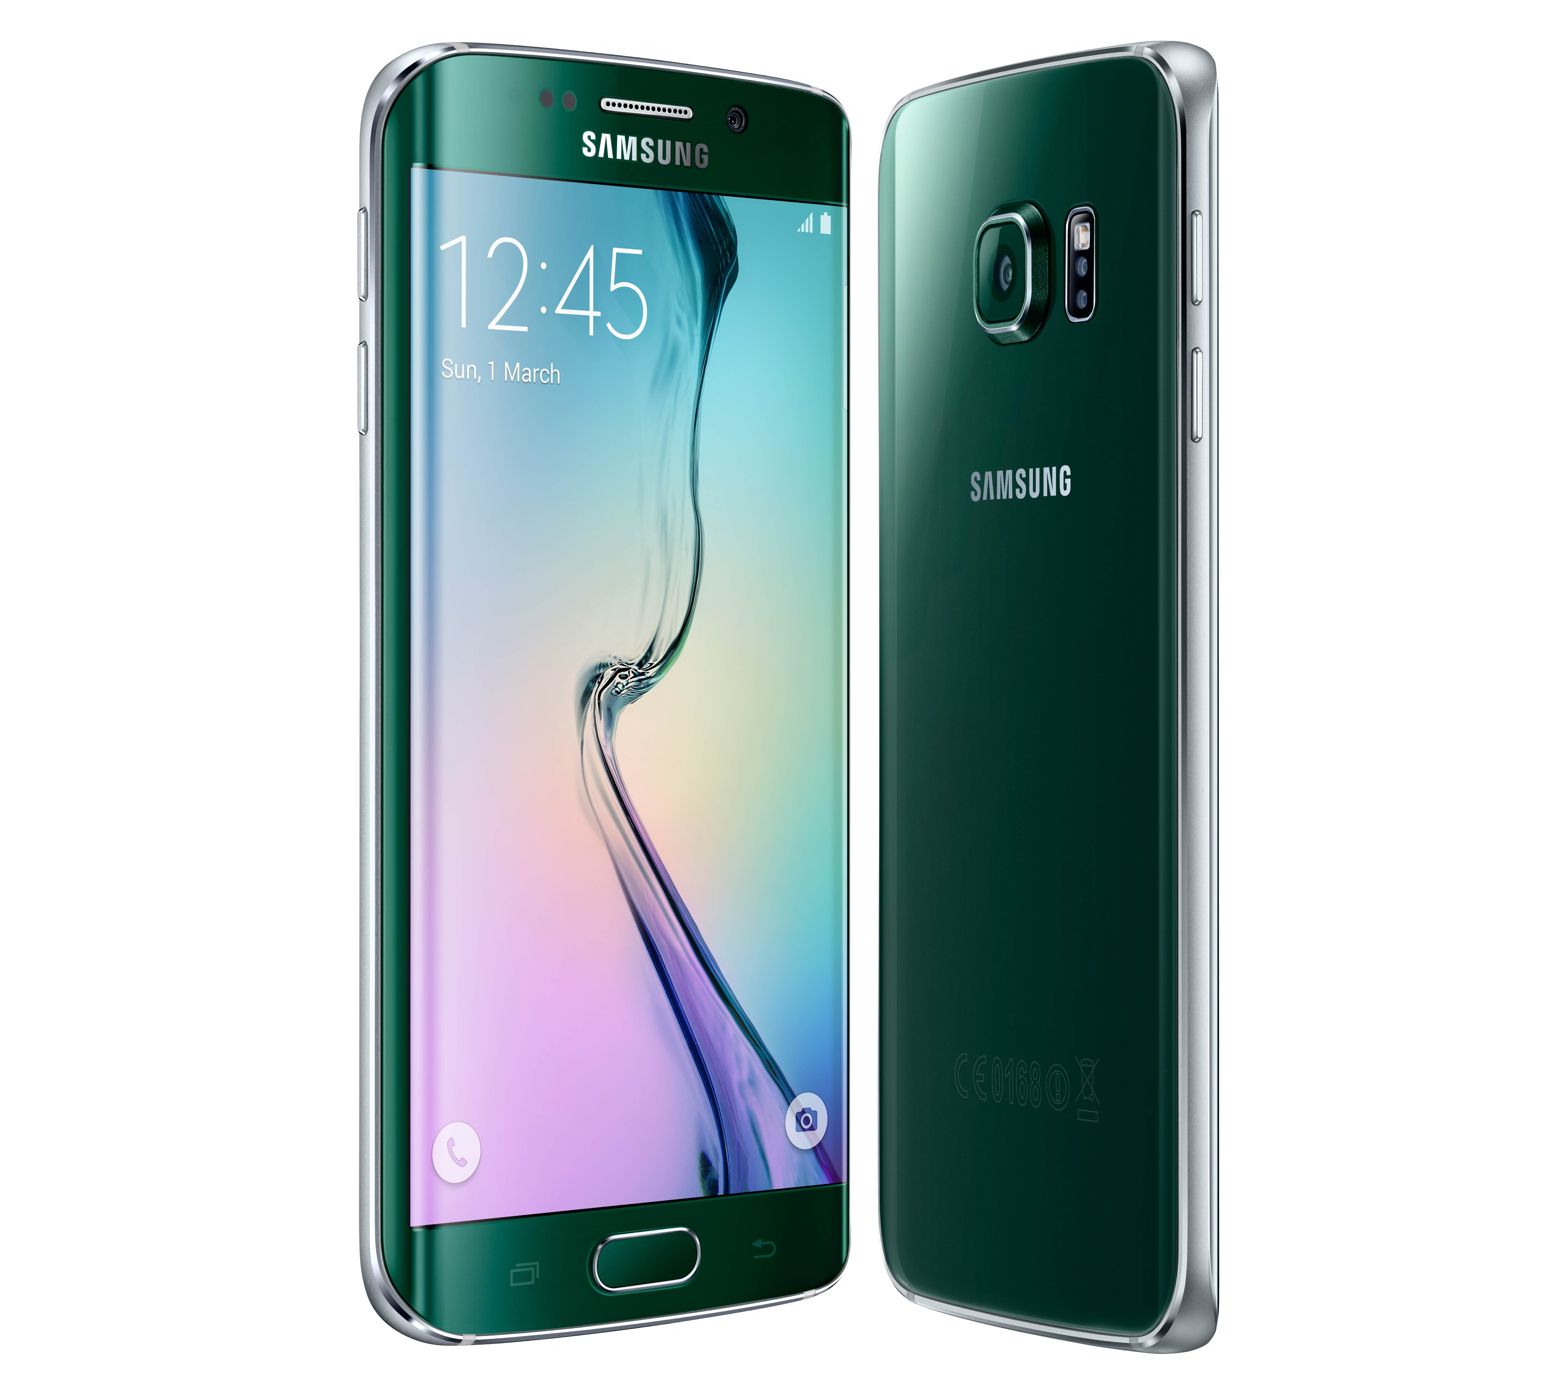 Samsung-Galaxy-S6-edge-in-green-emerald-and-Samsung-Galaxy-S6-in-blue-topaz